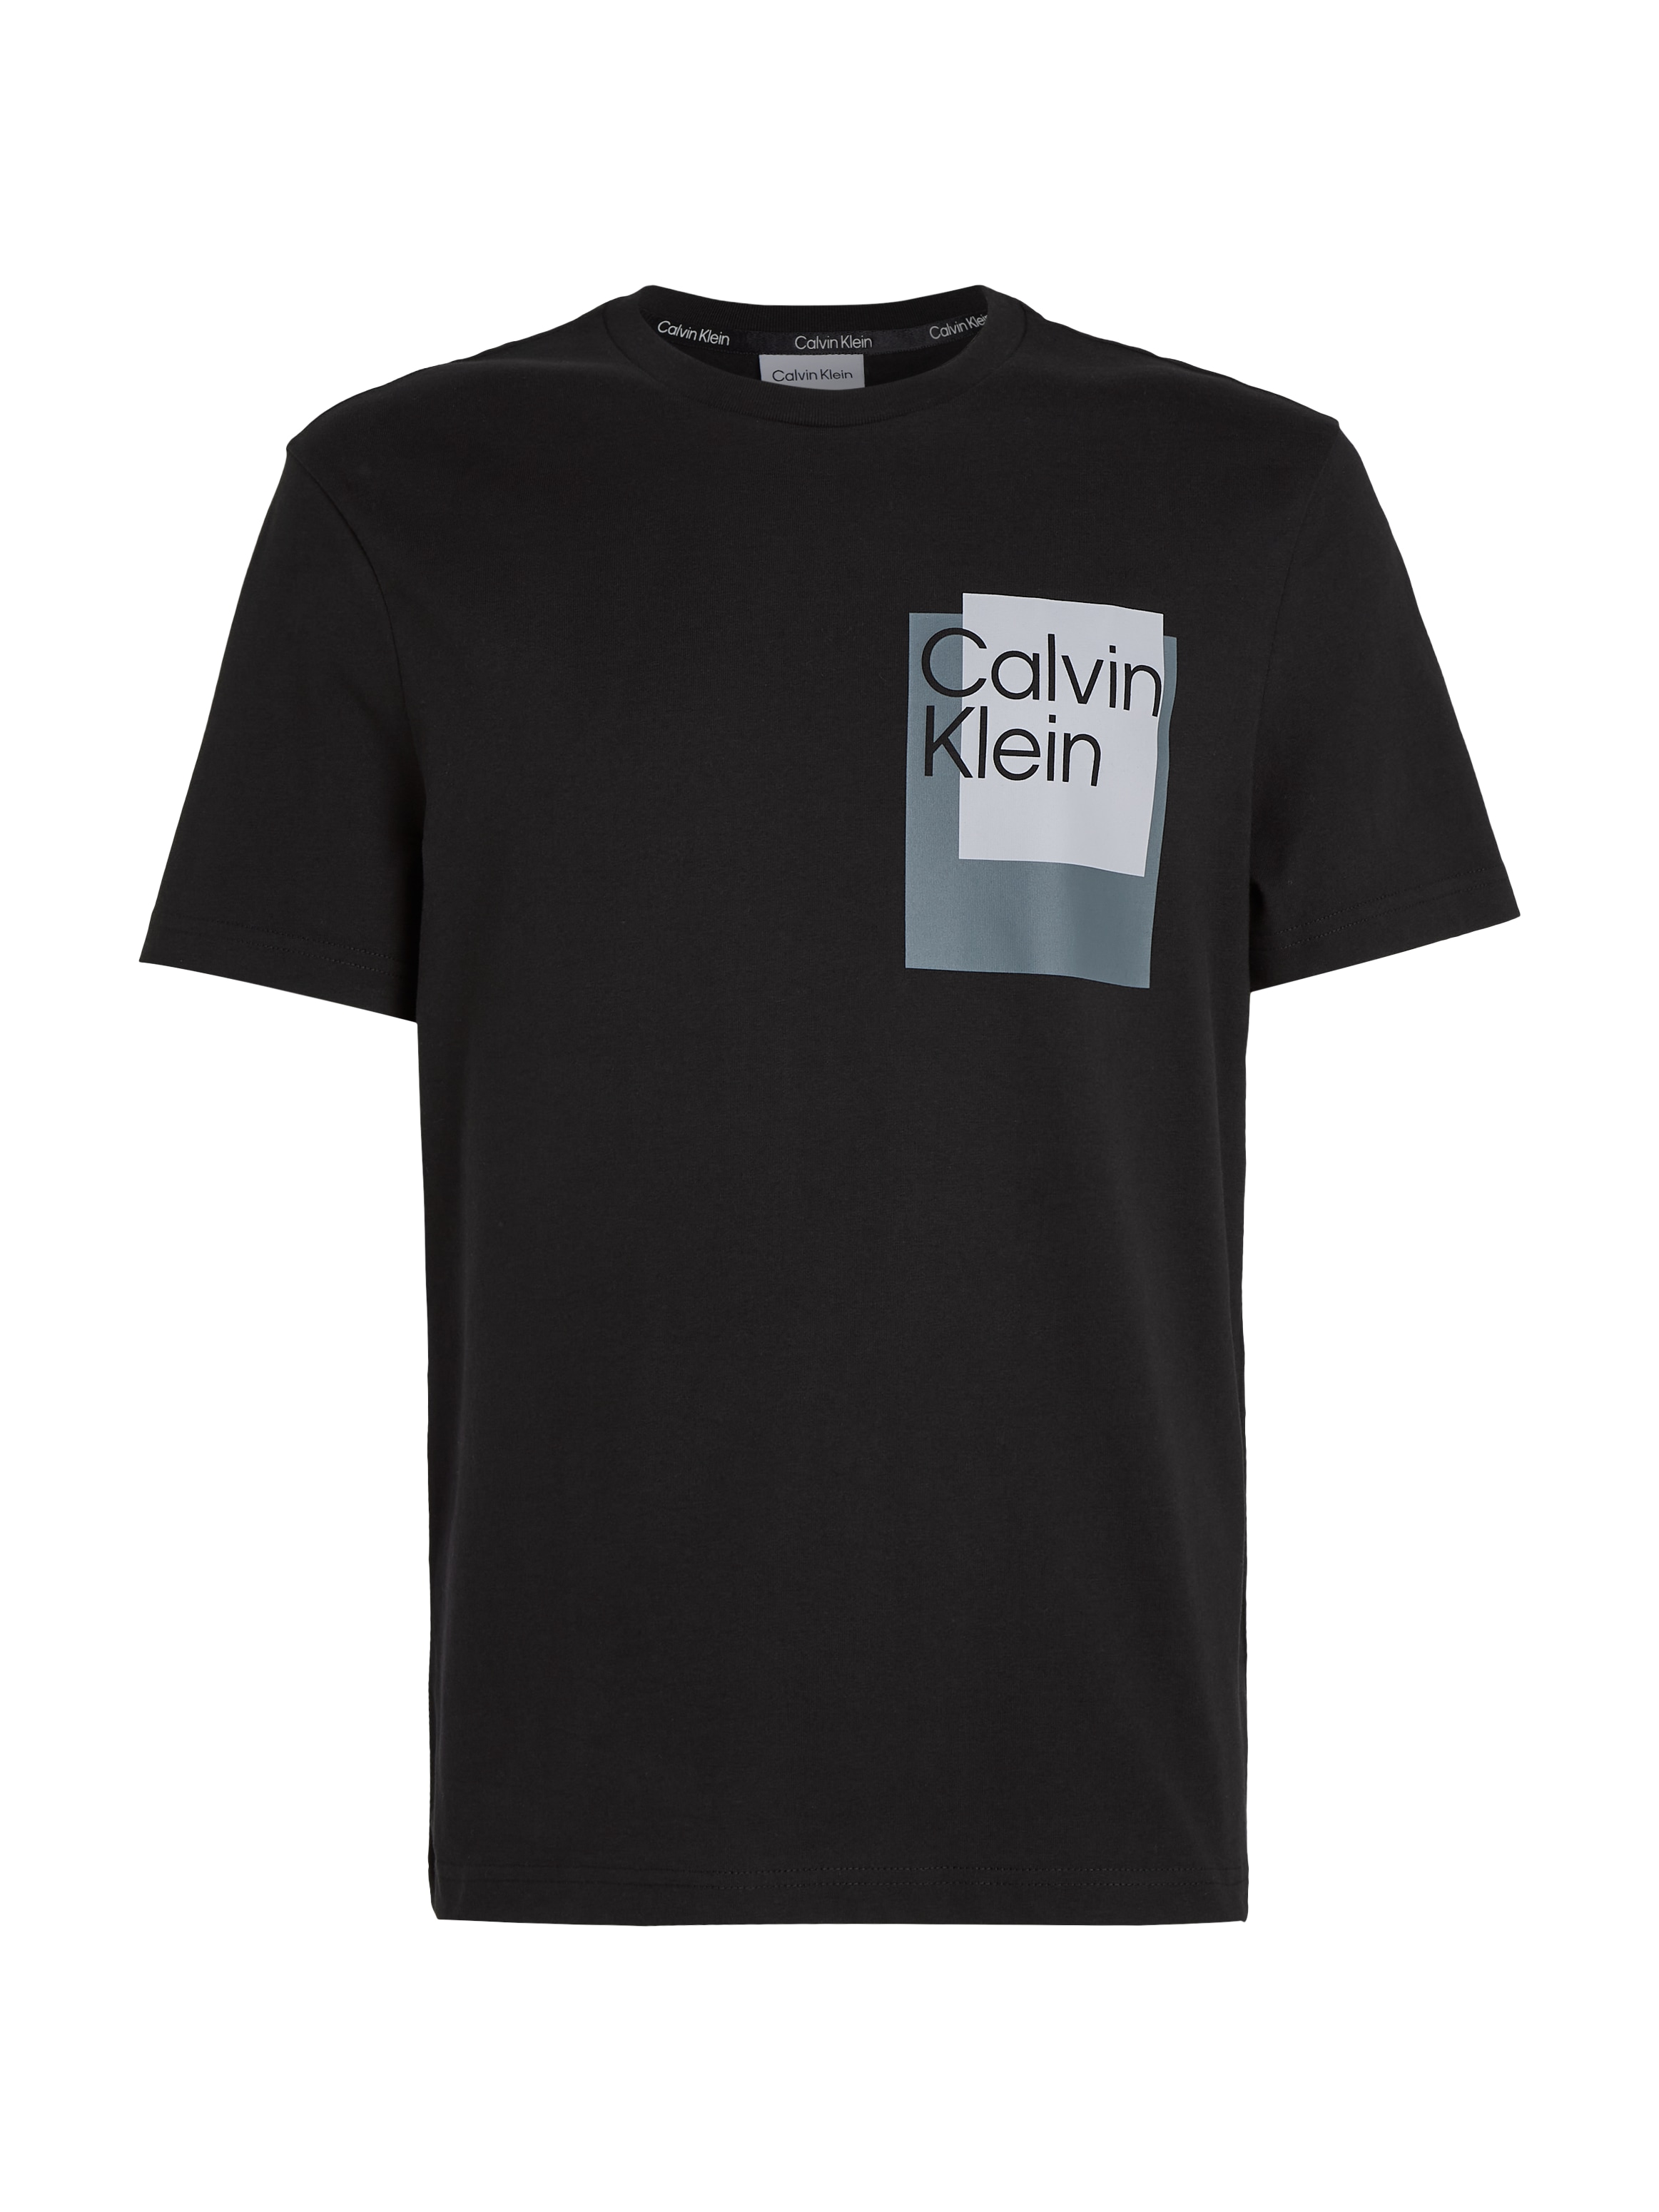 Klein T-SHIRT« ▷ BOX LOGO BAUR Calvin »OVERLAY | T-Shirt kaufen